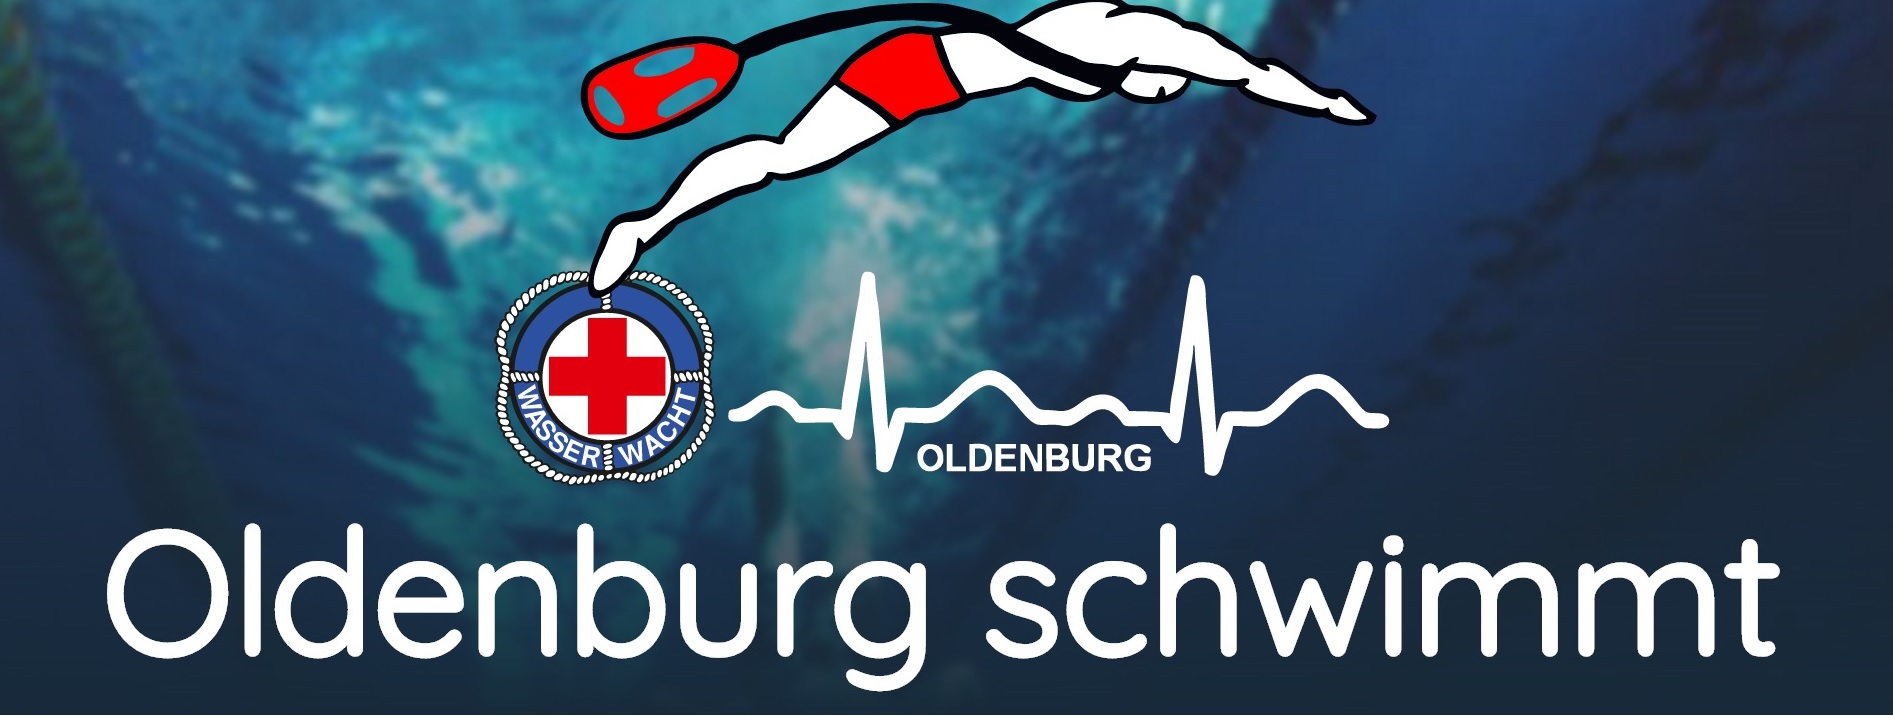 (c) Oldenburg-schwimmt.de